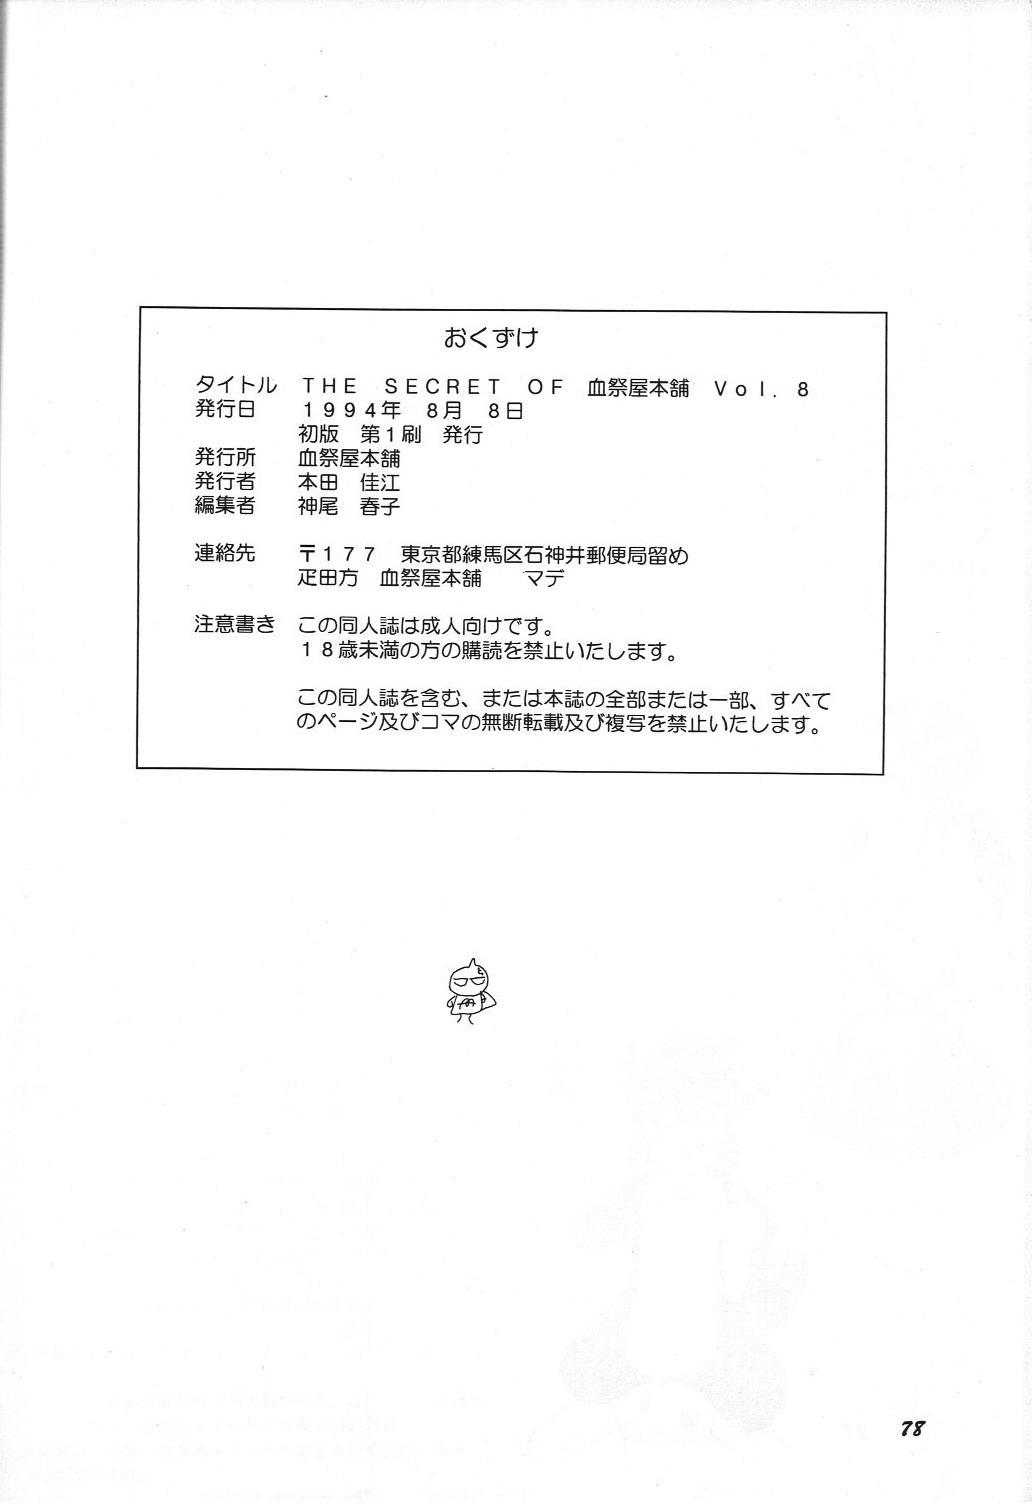 THE SECRET OF Chimatsuriya Vol. 8 76